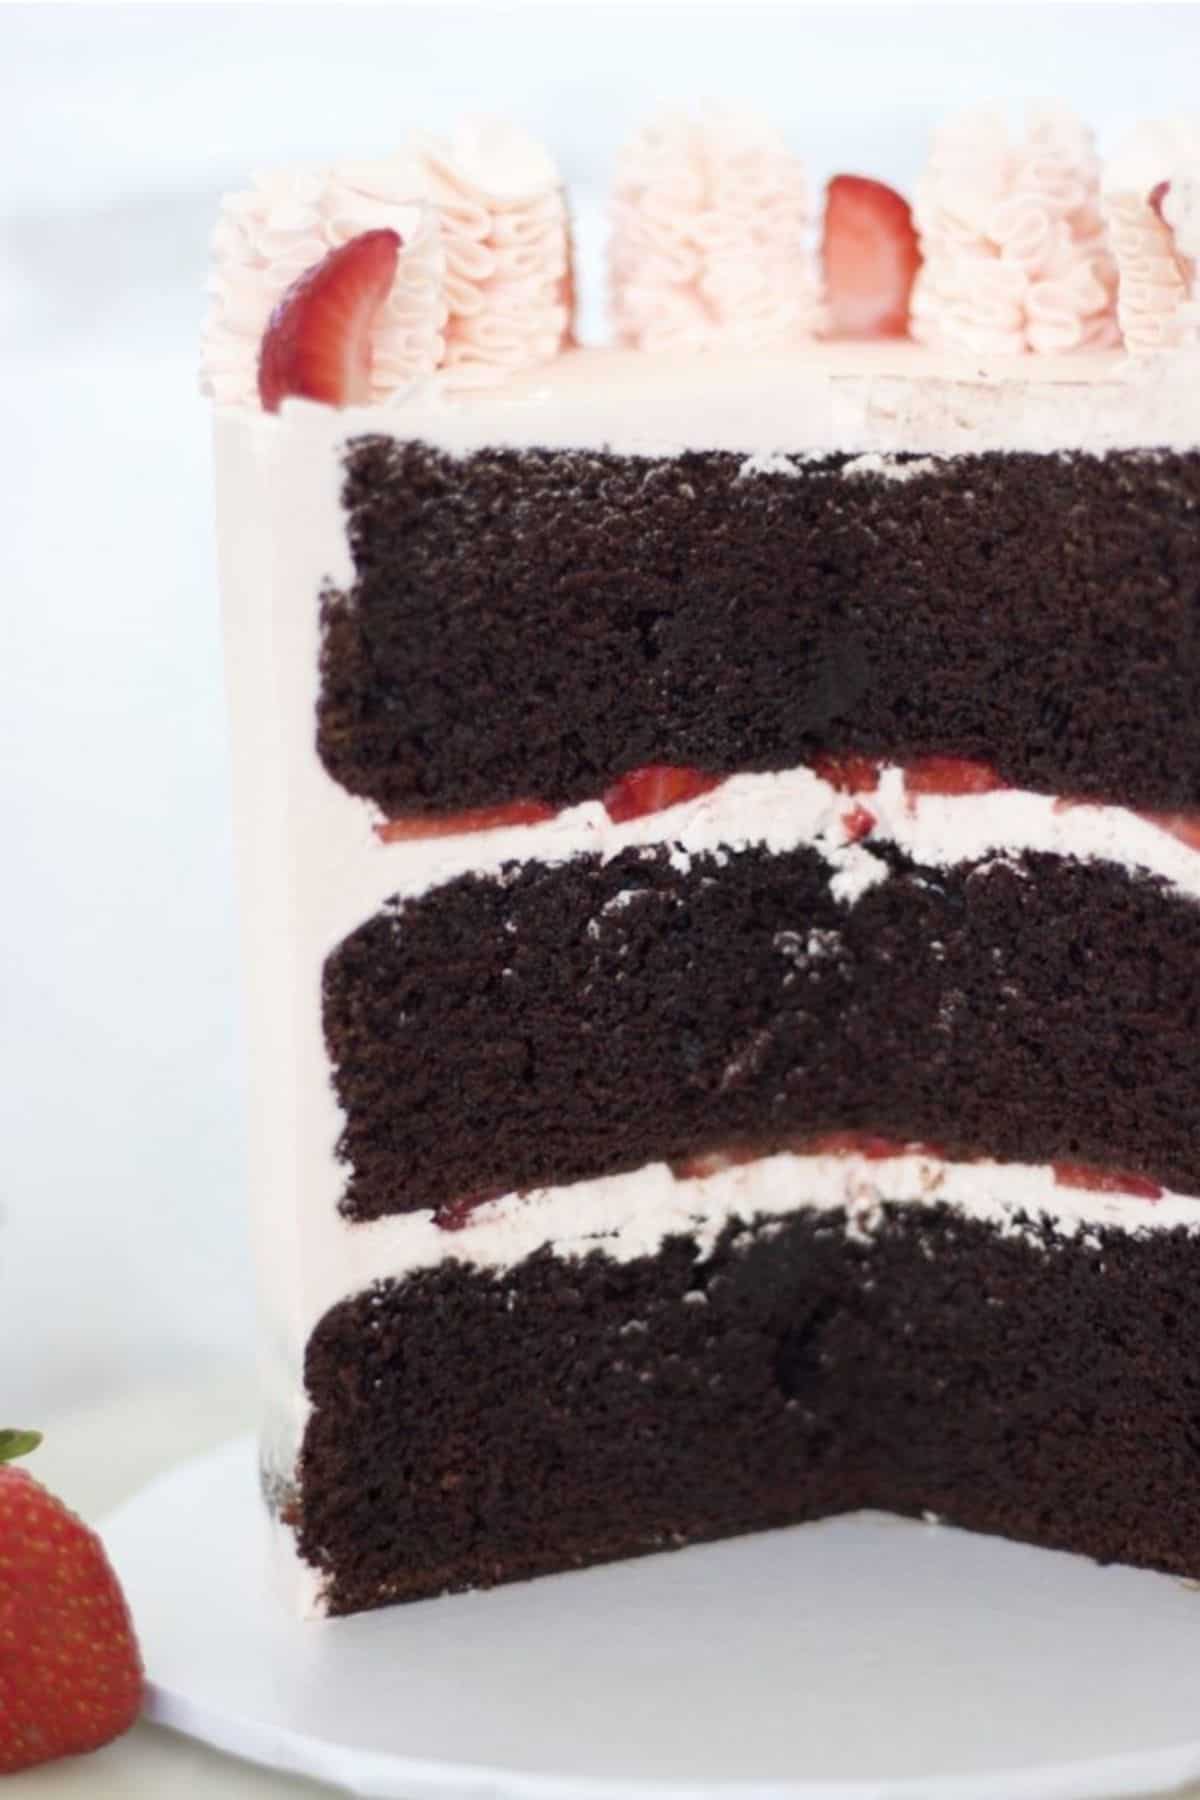 rose buttercream cake cut open to show inside of cake